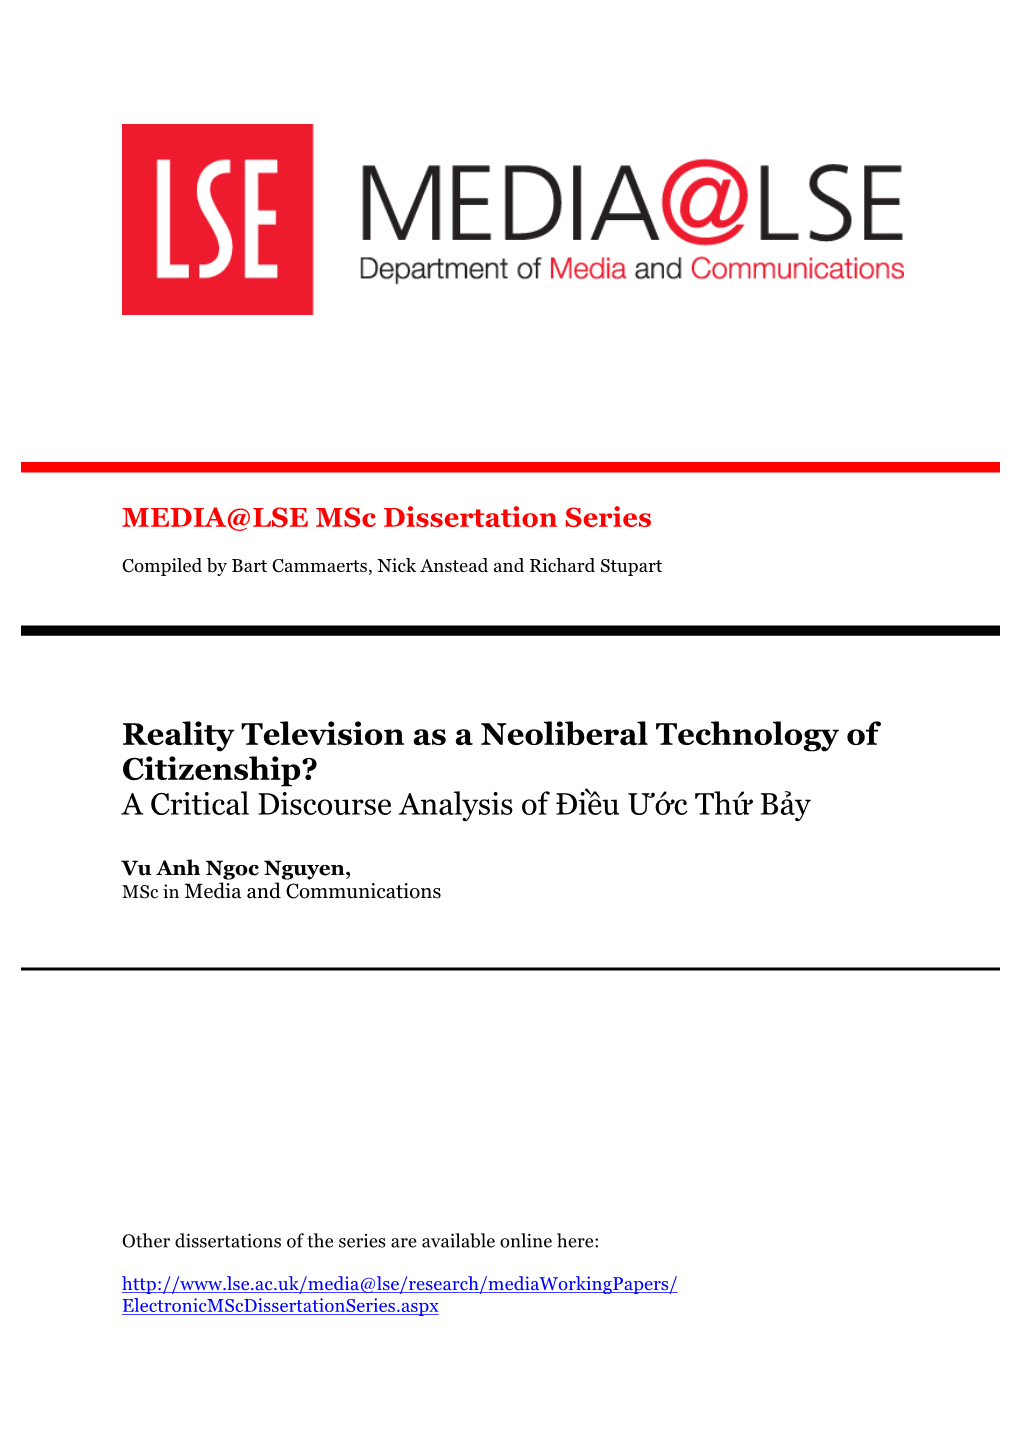 Reality Television As a Neoliberal Technology of Citizenship? a Critical Discourse Analysis of Điều Ước Thứ Bảy